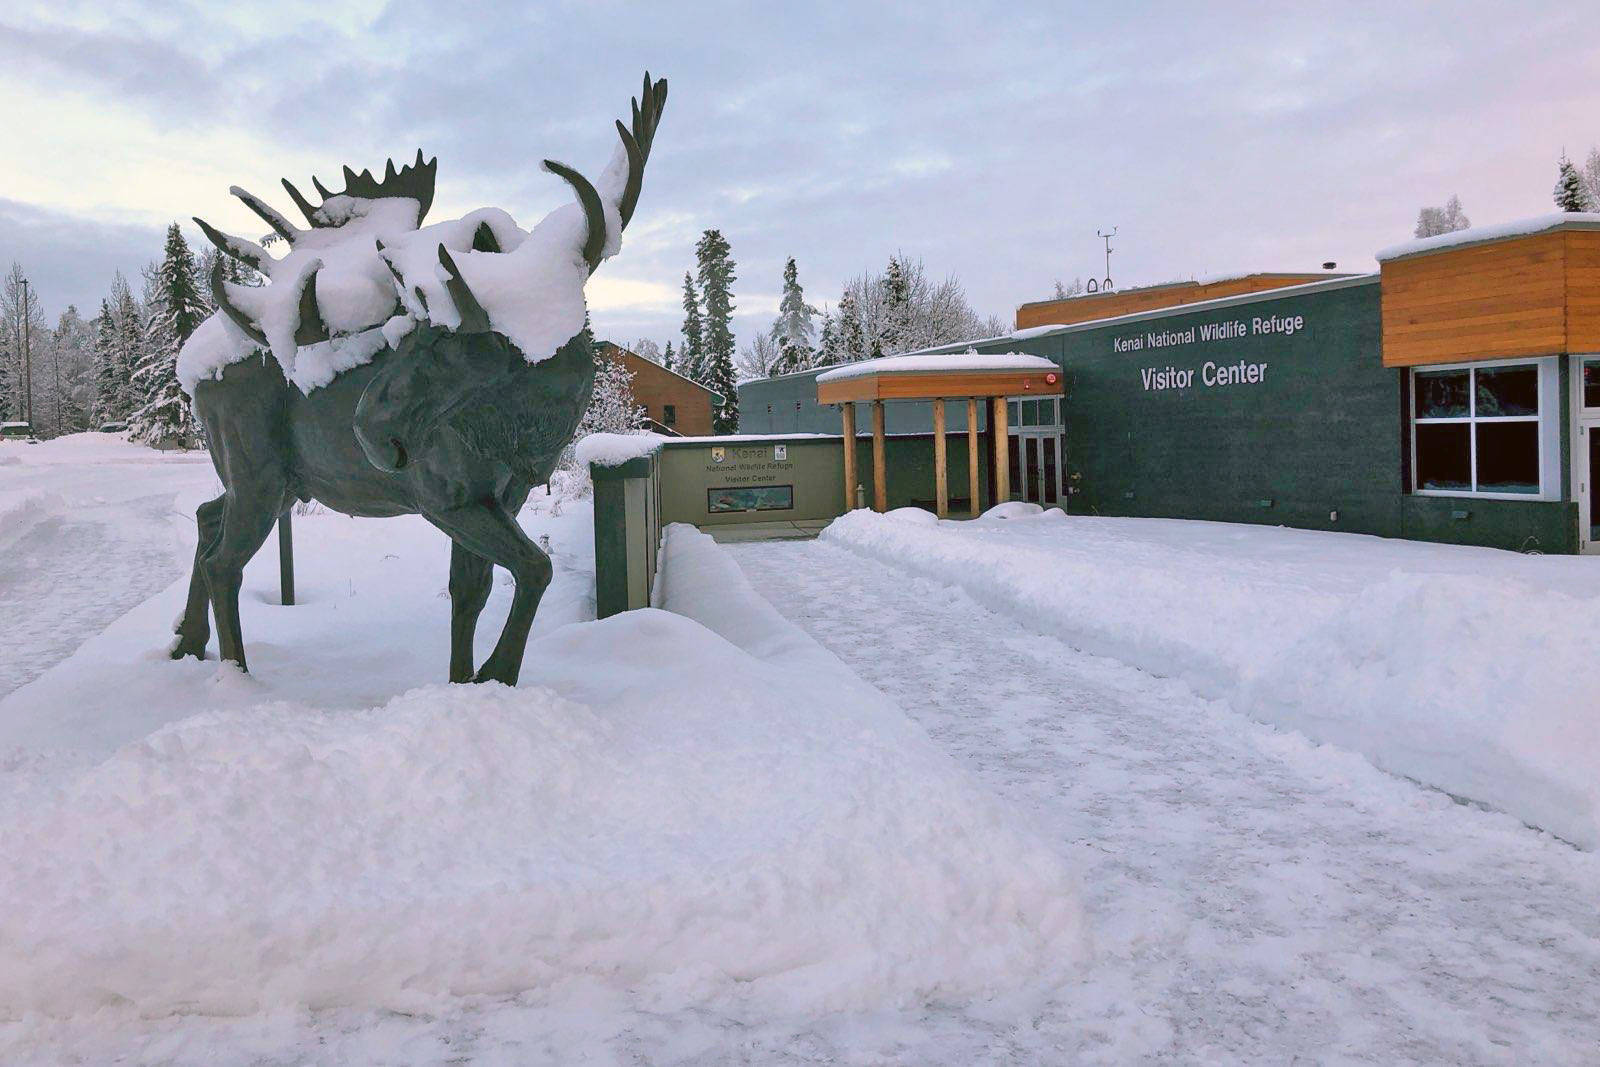 The Kenai National Wildlife Refuge headquarters in Soldotna, Alaska, on Wednesday, Jan. 30, 2019. (Photo by Victoria Petersen/Peninsula Clarion)